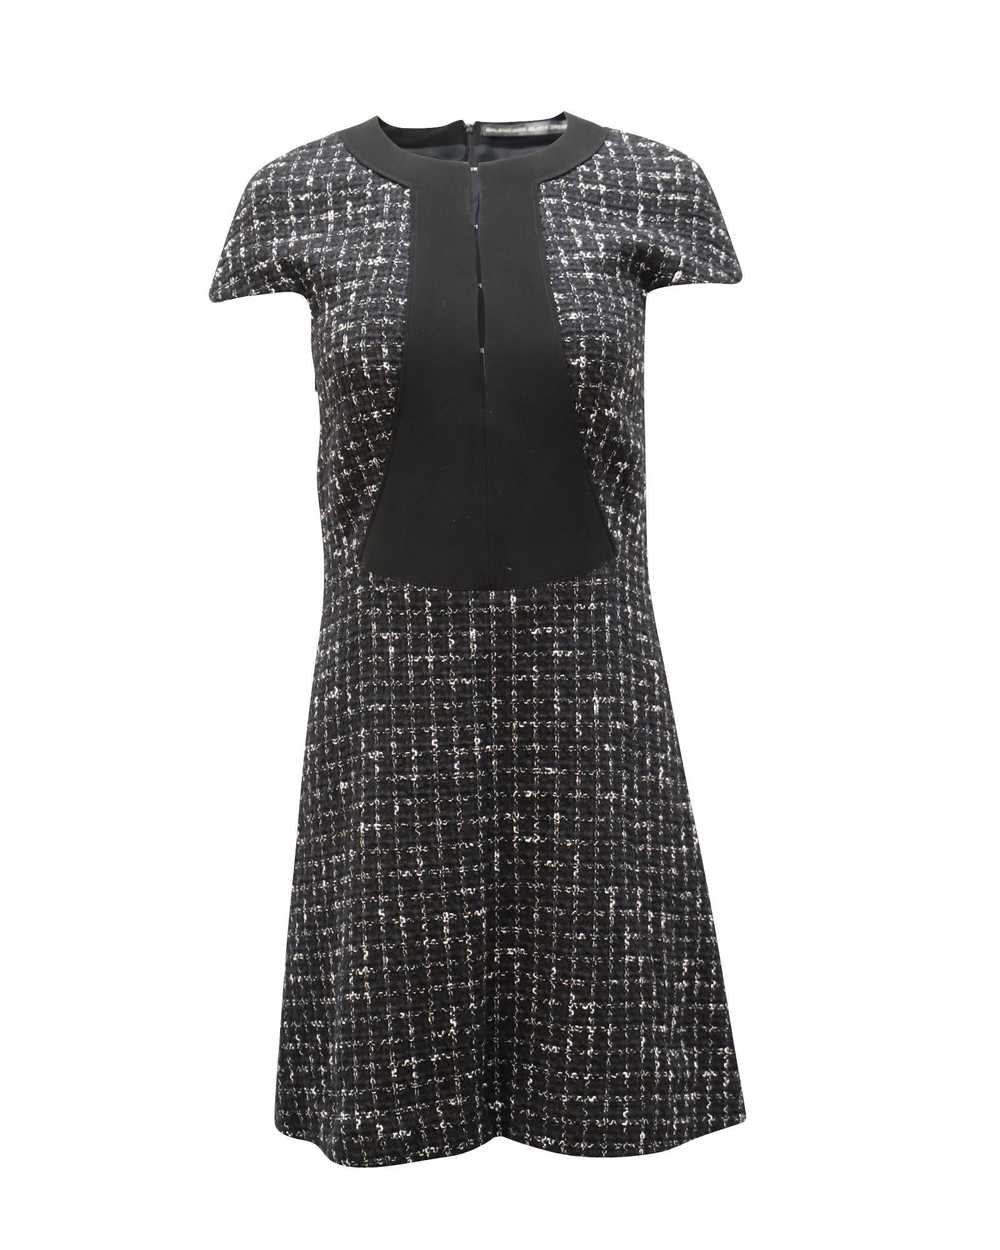 Balenciaga Black Cotton Tweed Shift Dress - image 1